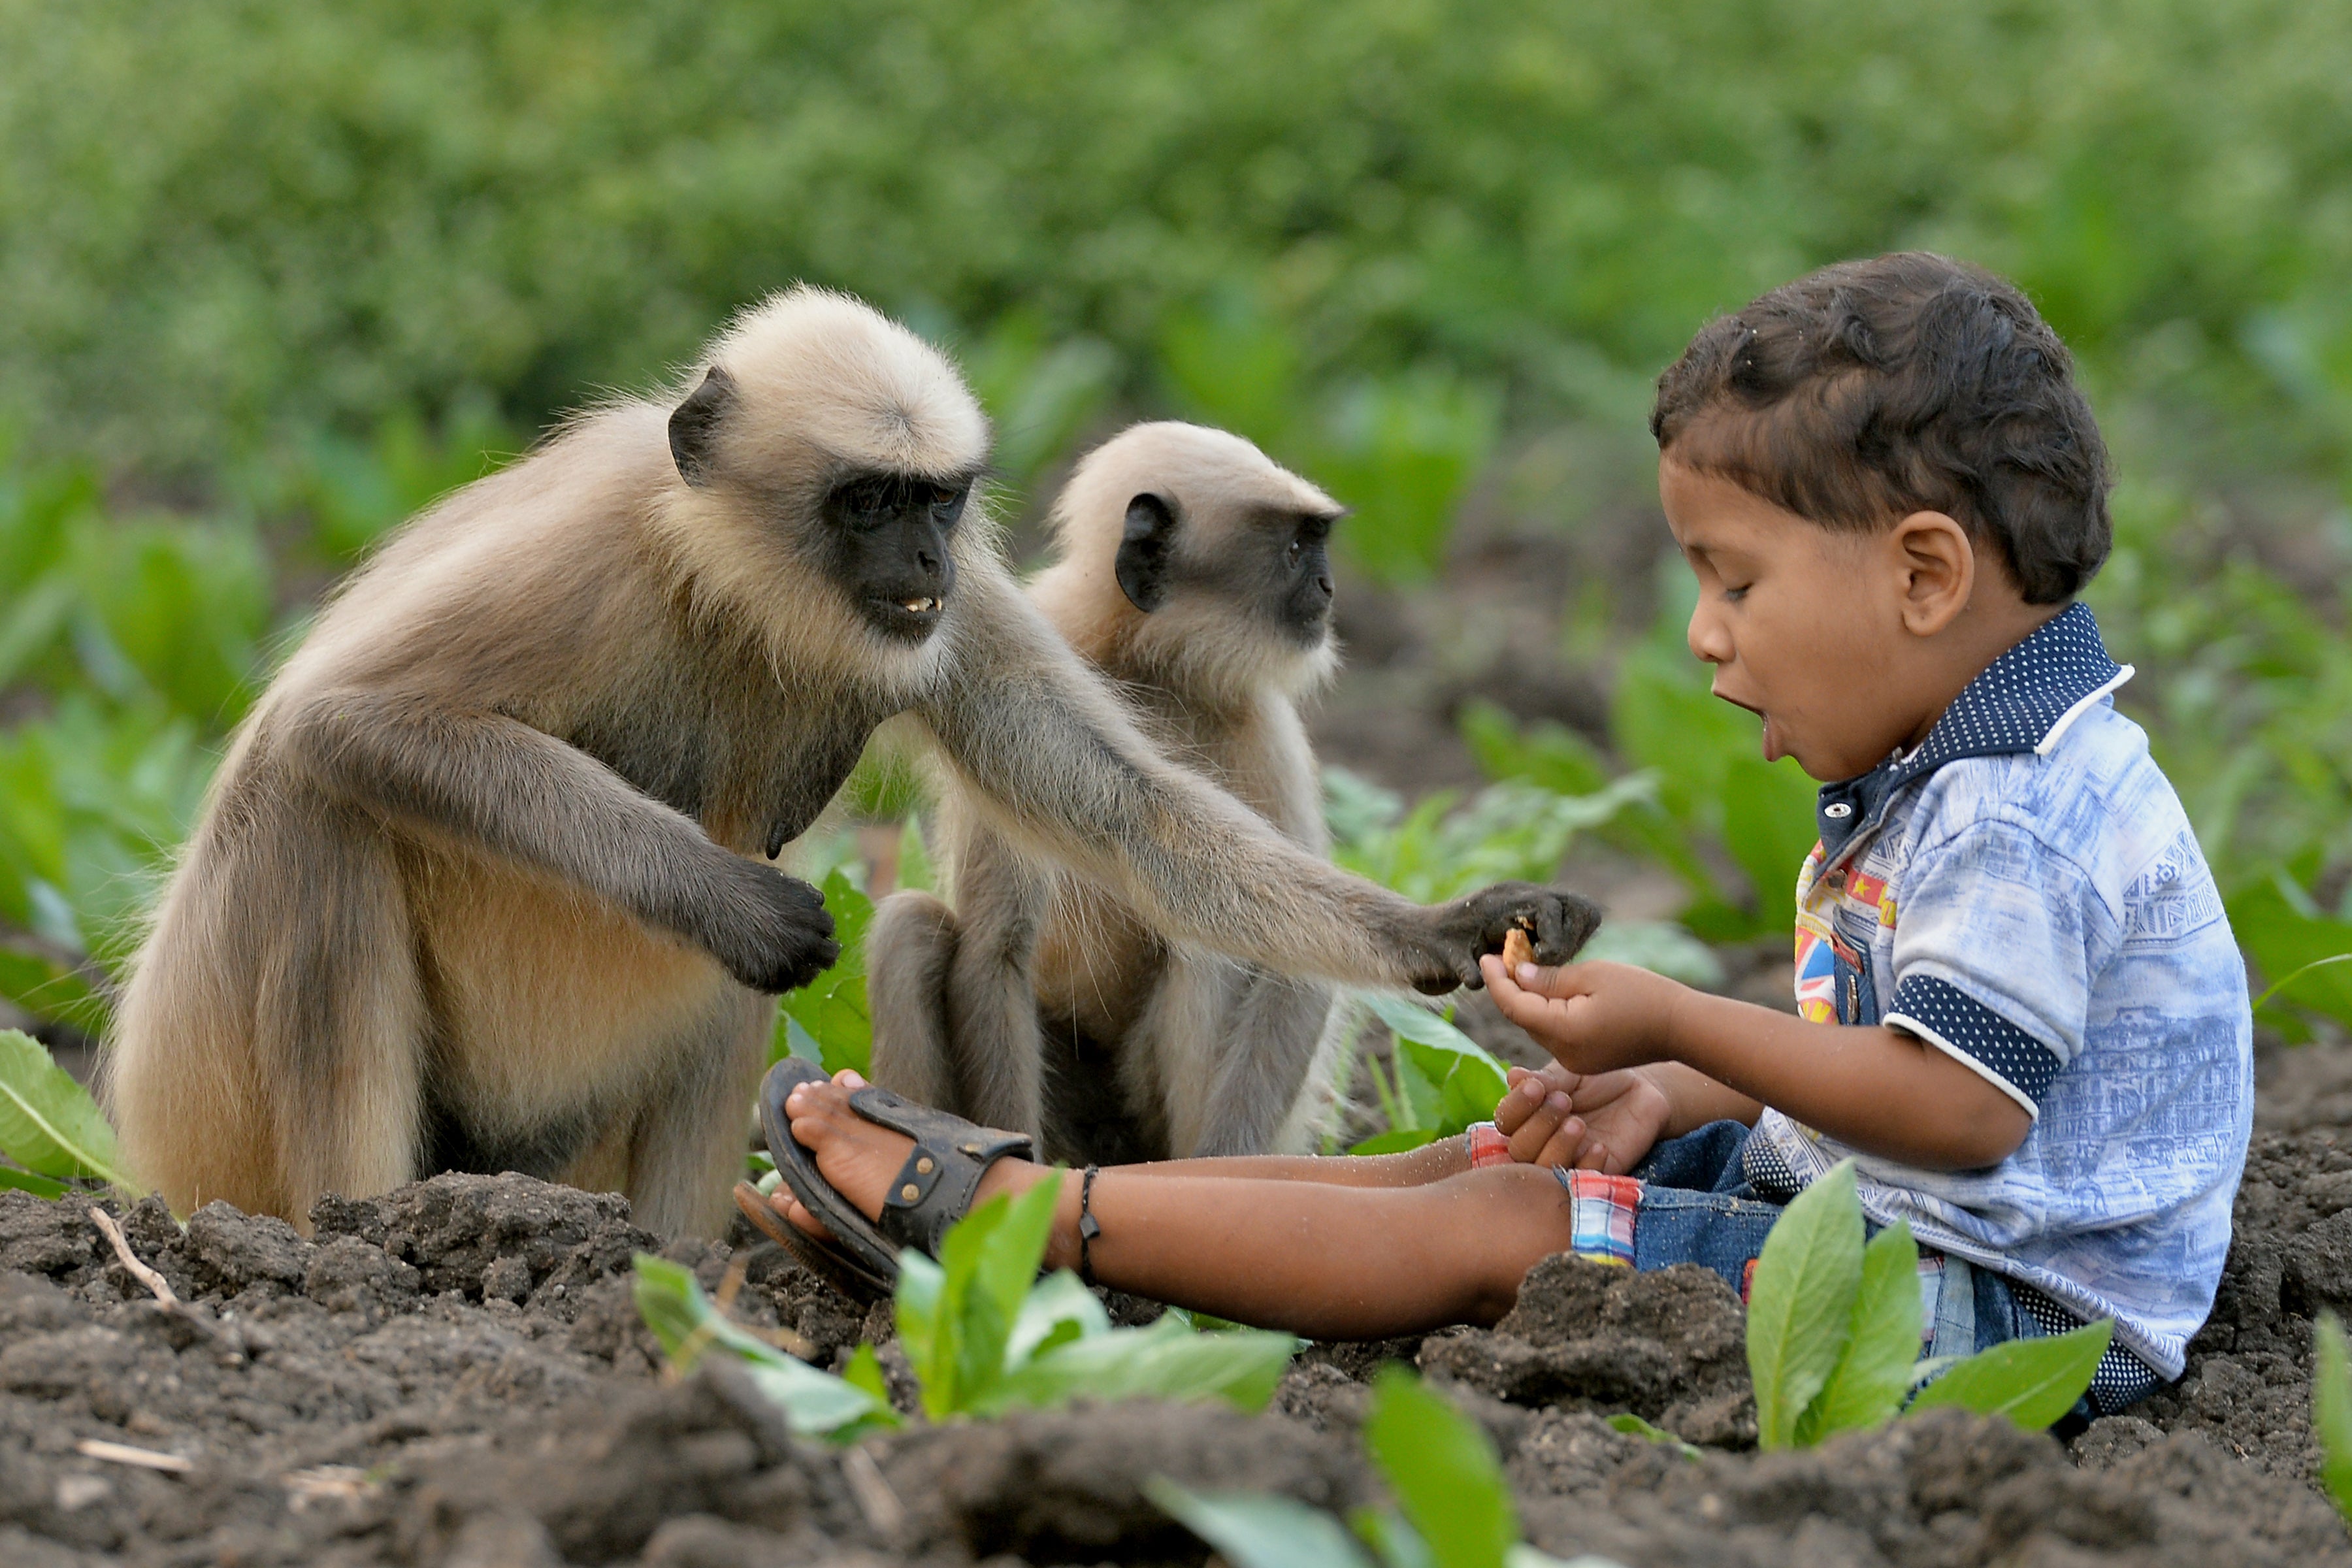 Representational image showing an Indian child feeding monkeys